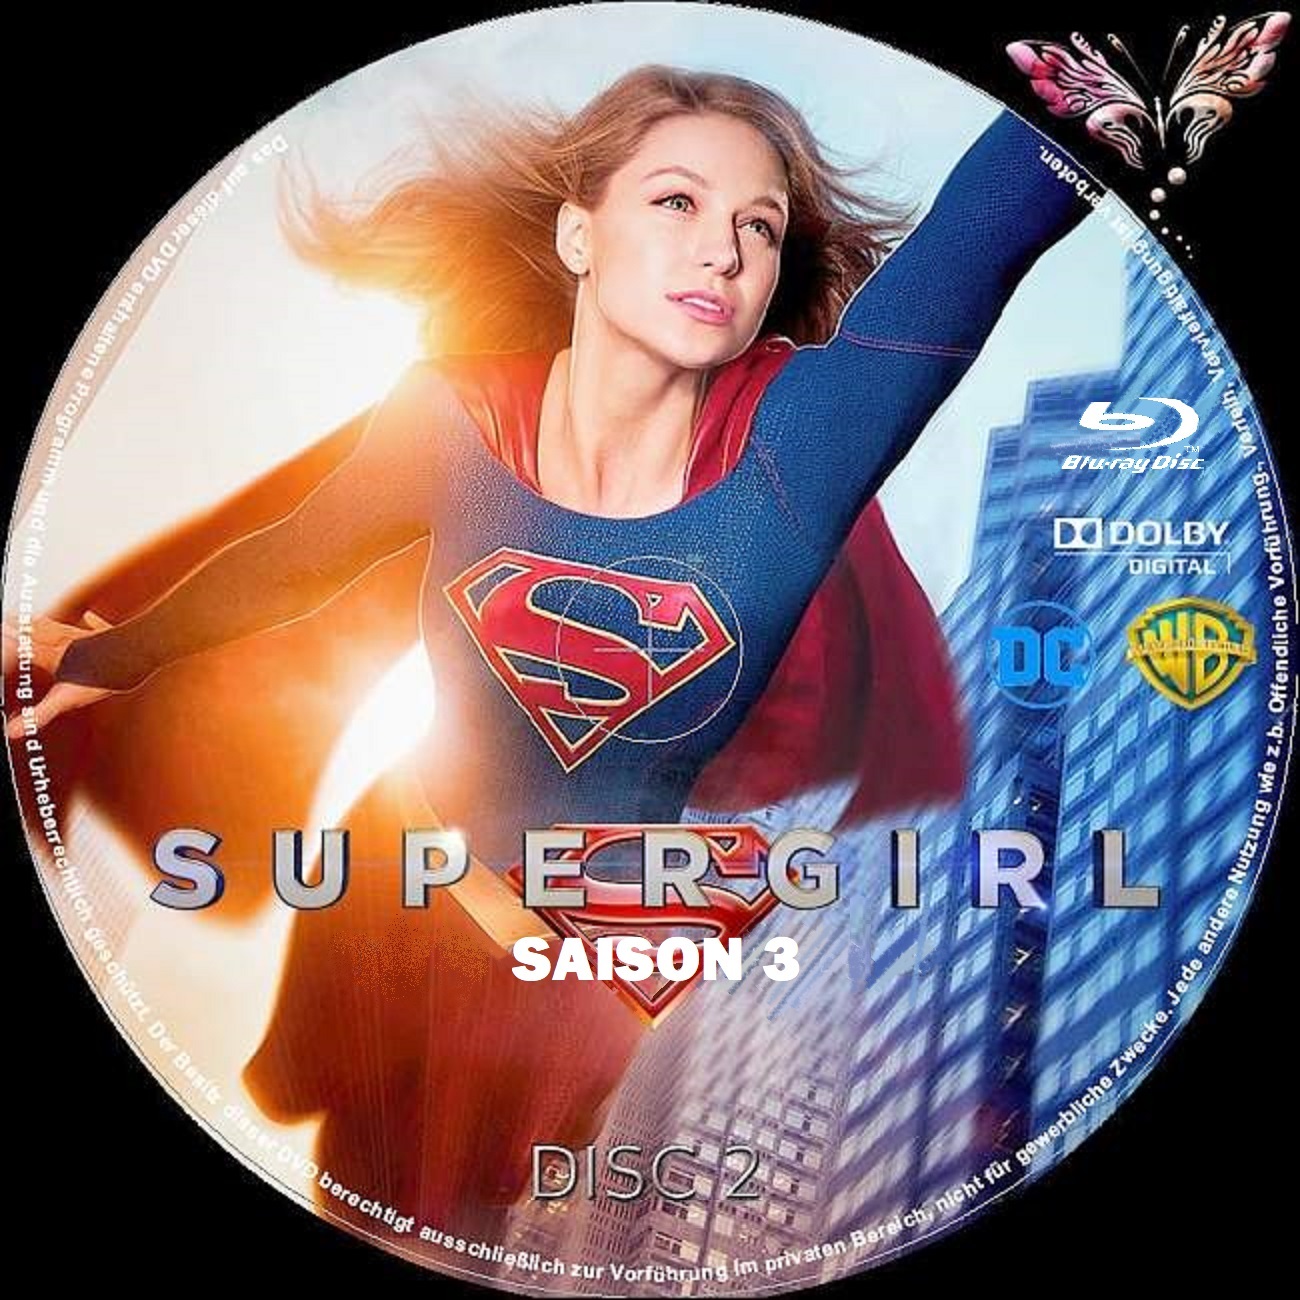 Supergirl saison 3 custom (BLU-RAY) DISC 2